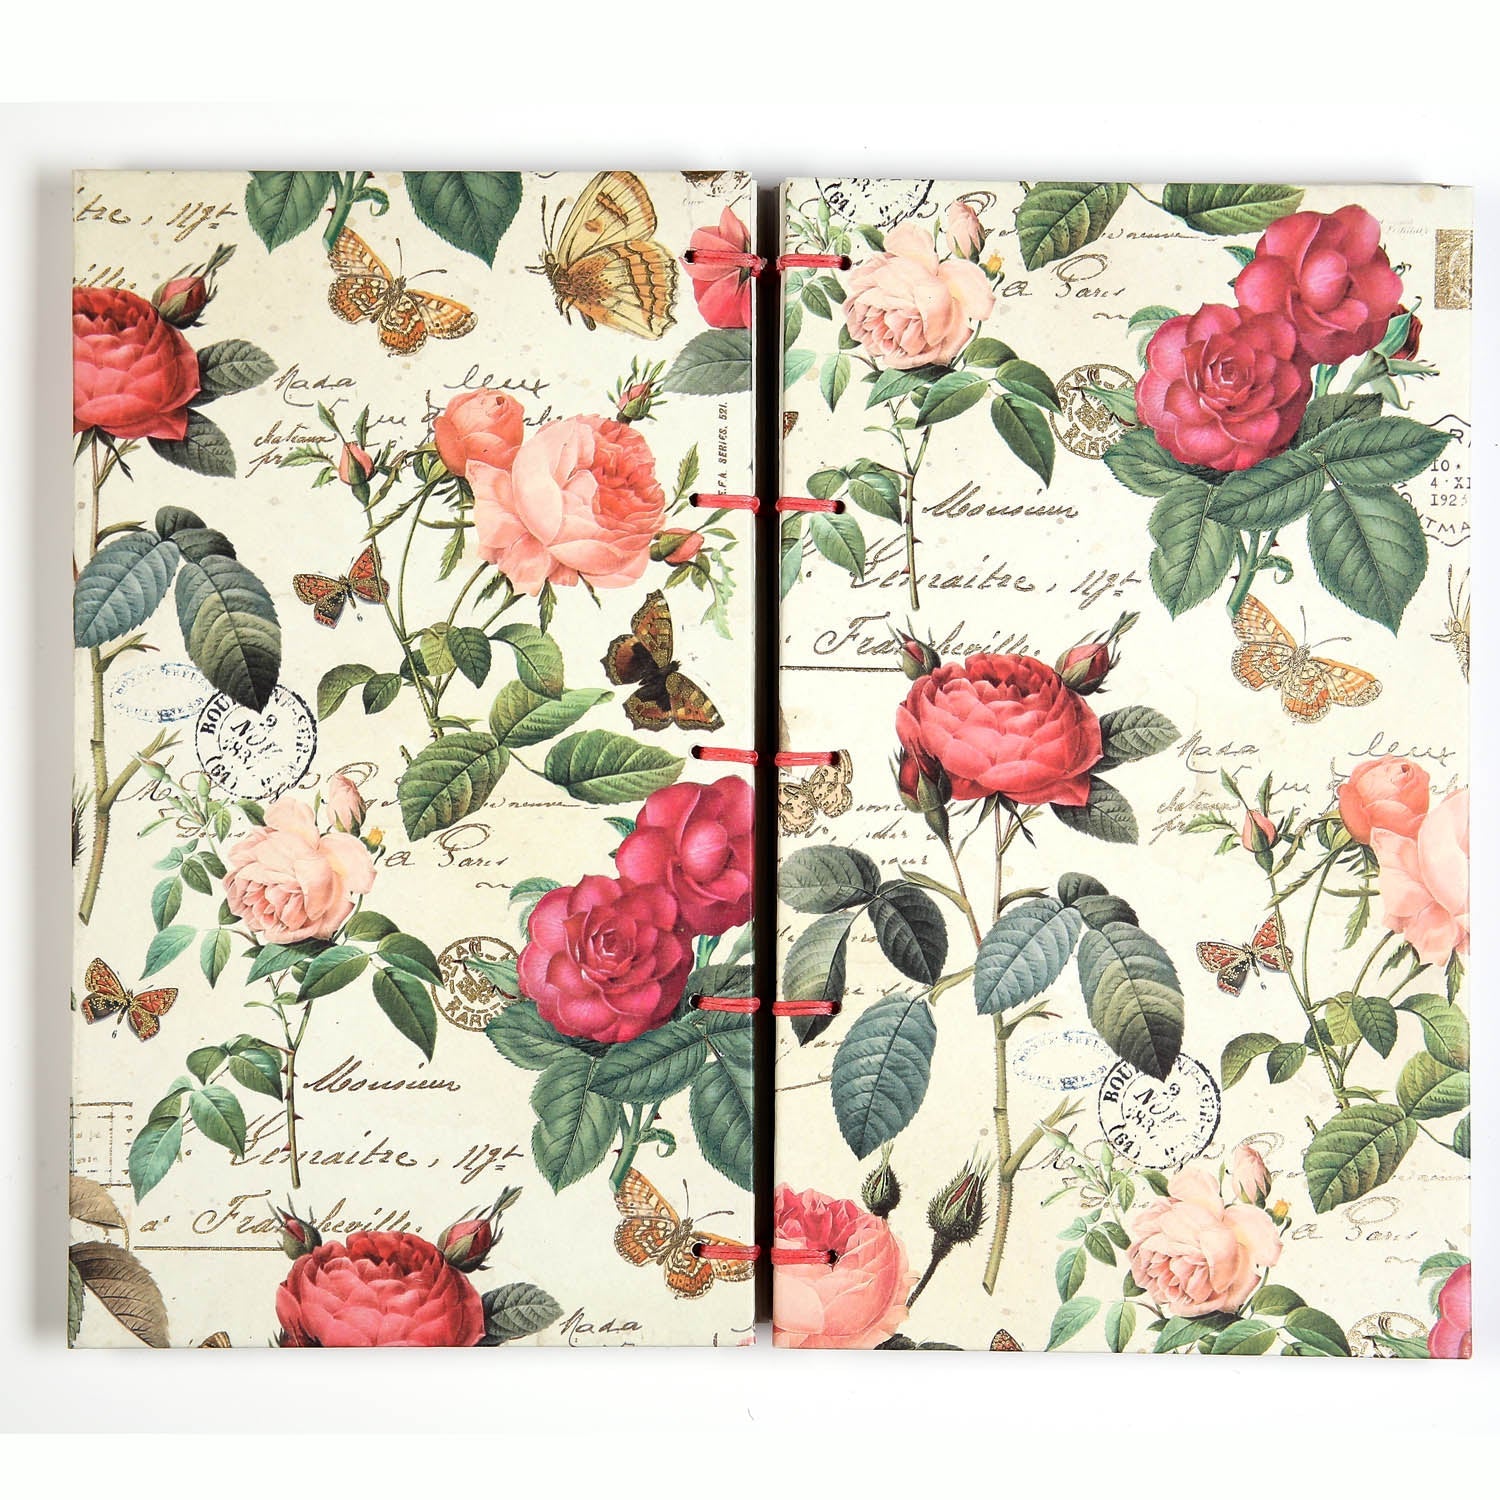 Handmade Notebook with Byzantine Binding - Rose